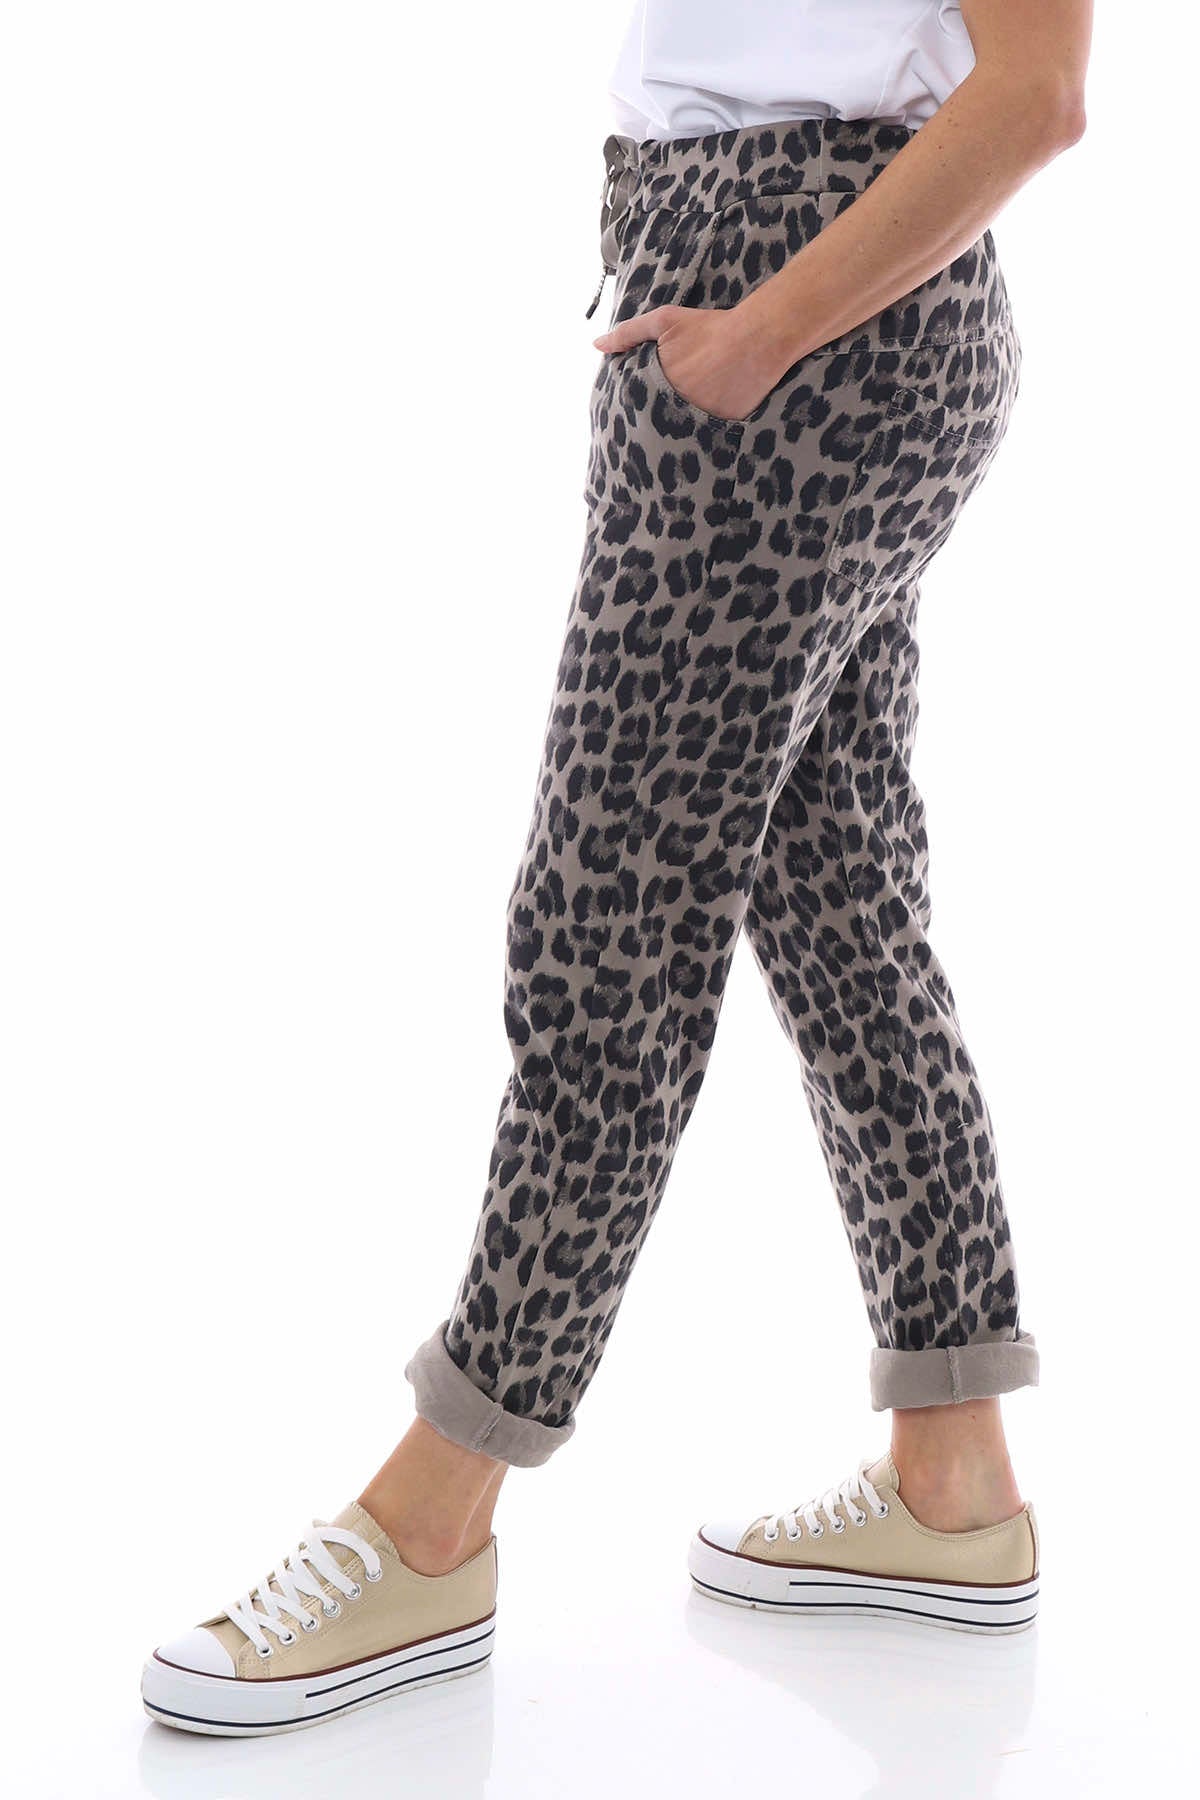 Minskip Leopard Print Jersey Pants Mocha